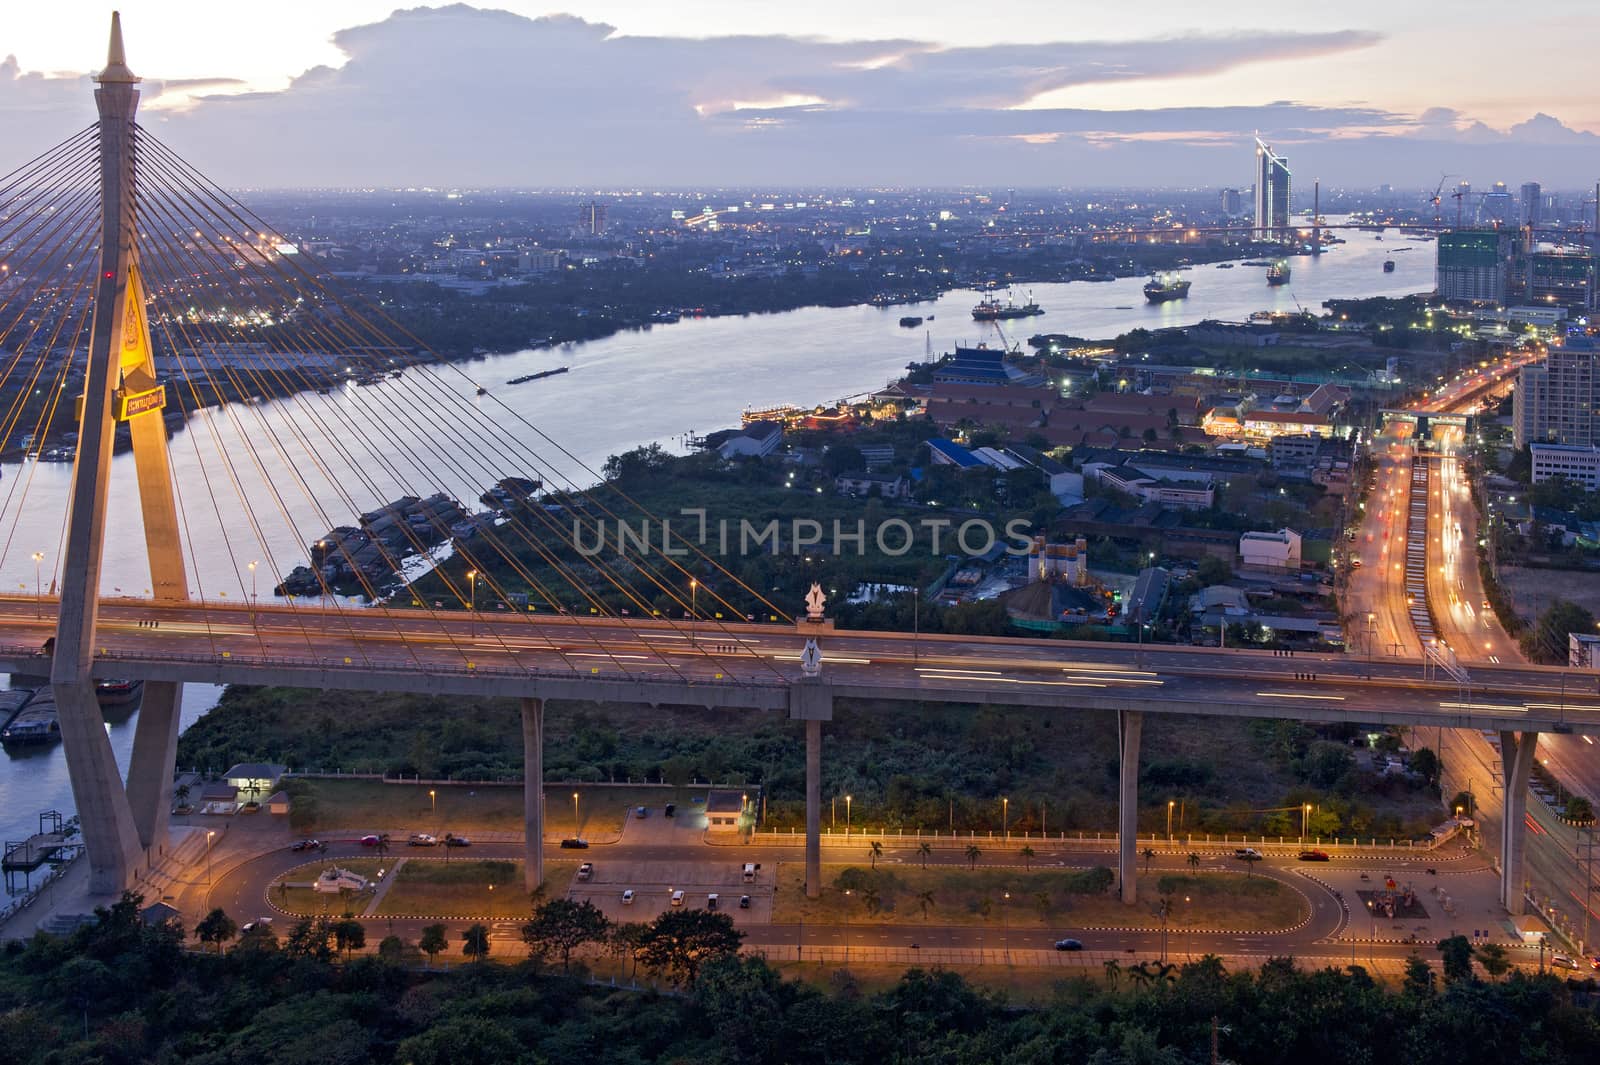 Bhumibol Bridge (the Industrial Ring Road Bridge) in Thailand by think4photop